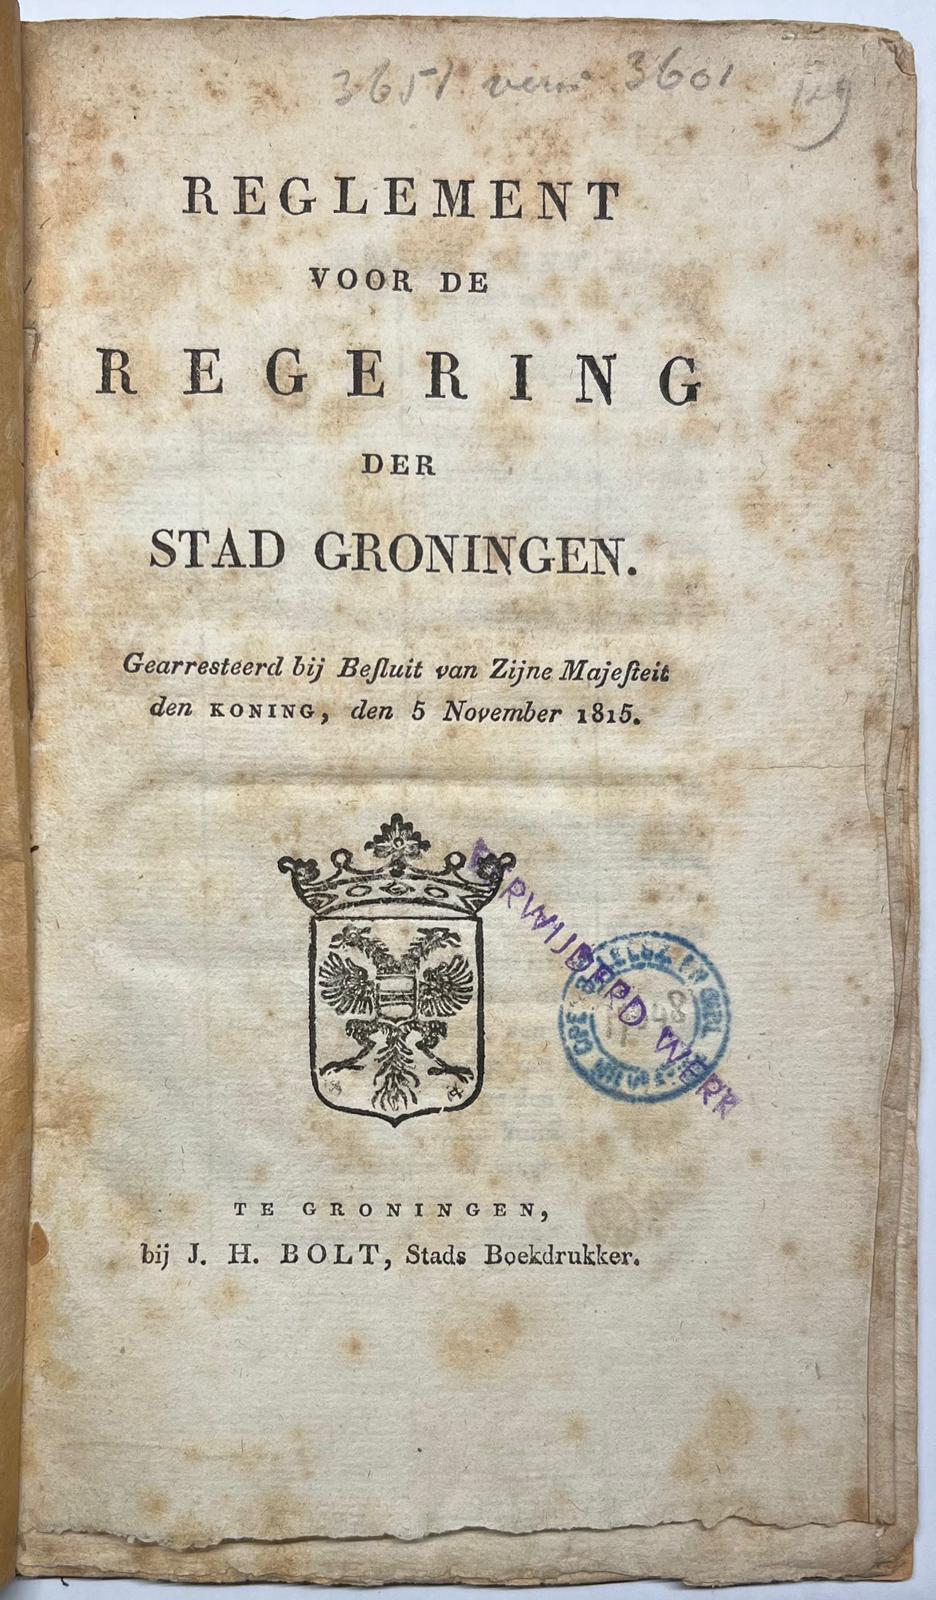 [Printed publication, [1815], Batavian Republic] Reglement voor de Regering der Stad Groningen. J.H. Bolt, Groningen, [1815], 33 pp.